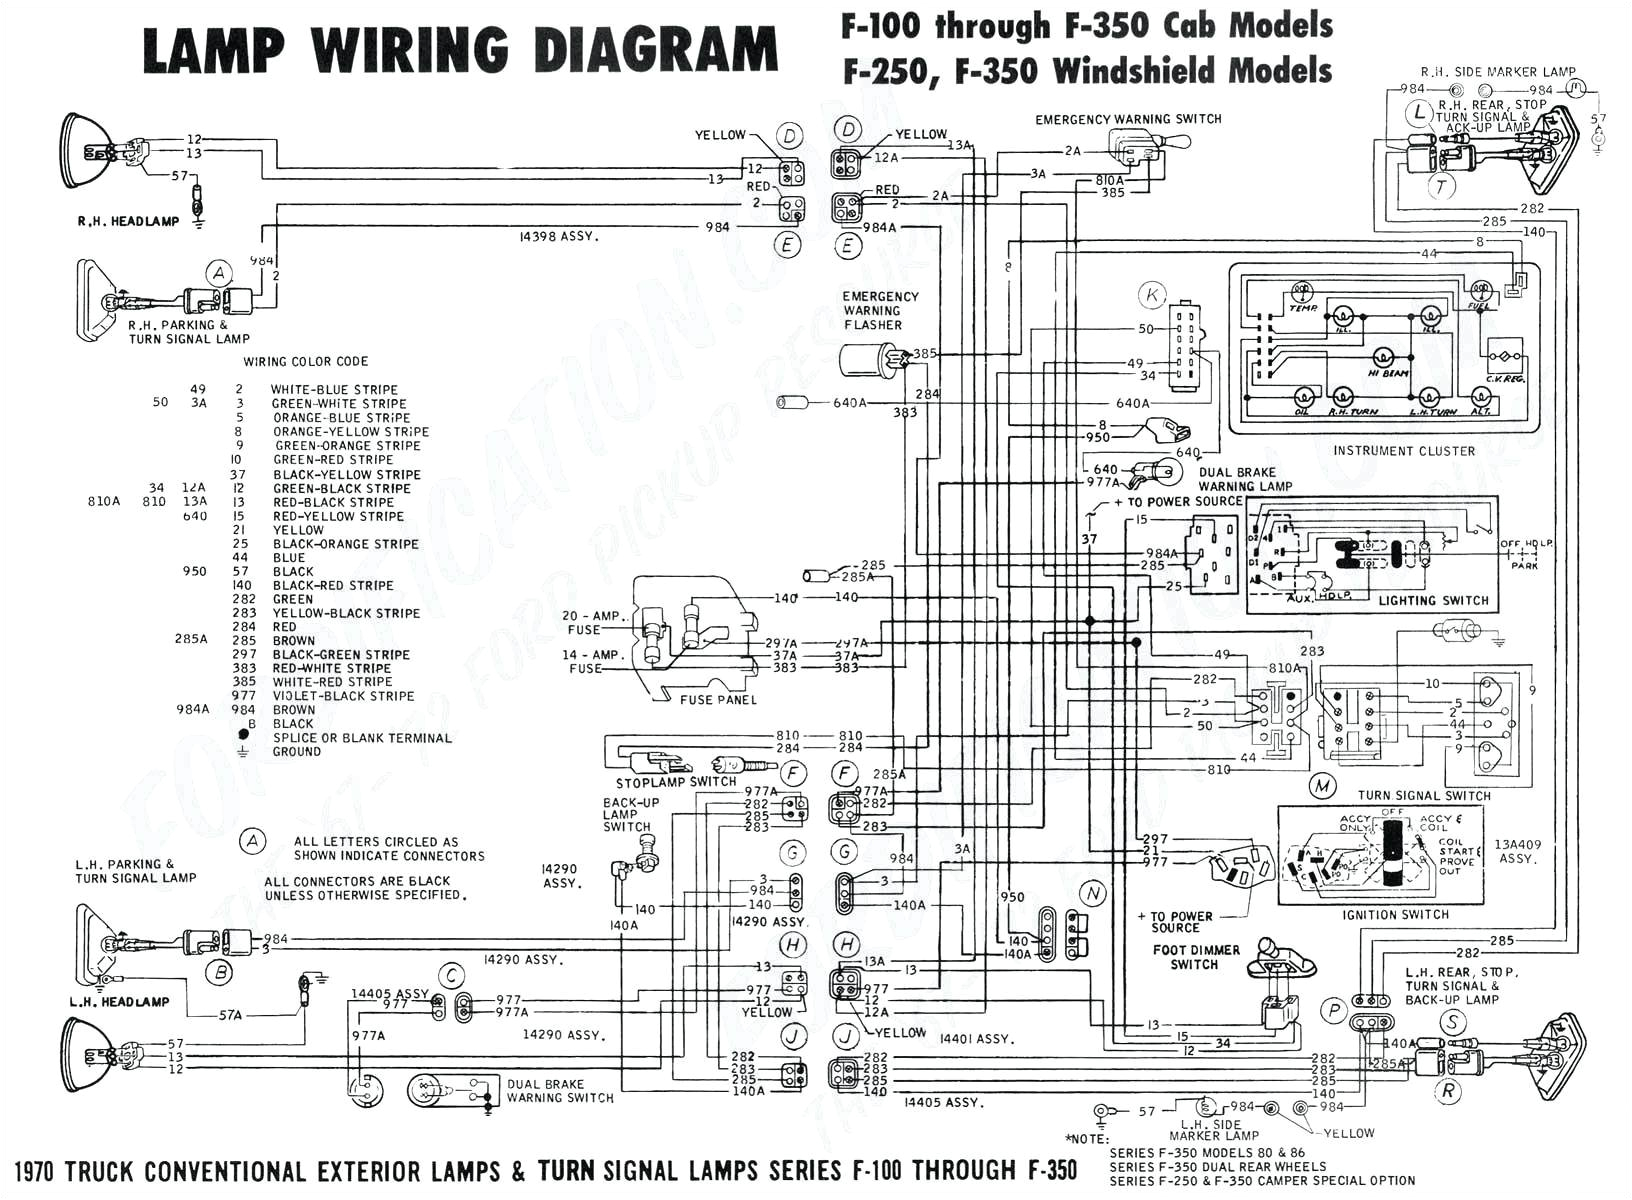 Suzuki X3 Wiring Diagram Lafayette Wiring Diagrams Wiring Diagram